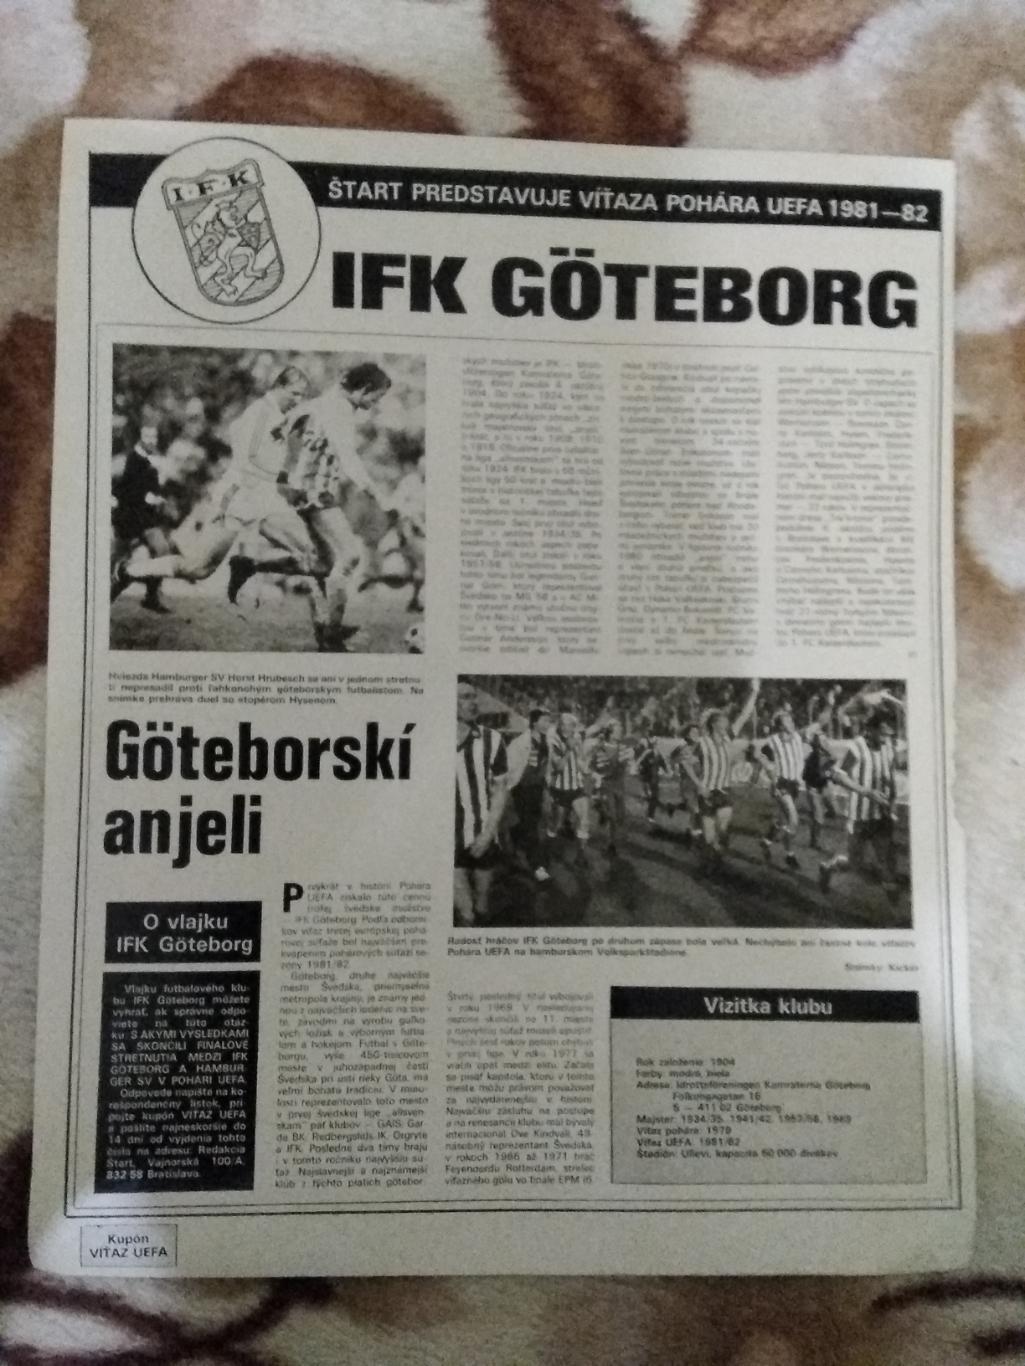 Постер.Футбол.Гетеборг (Швеция).Старт 1982 г. 1